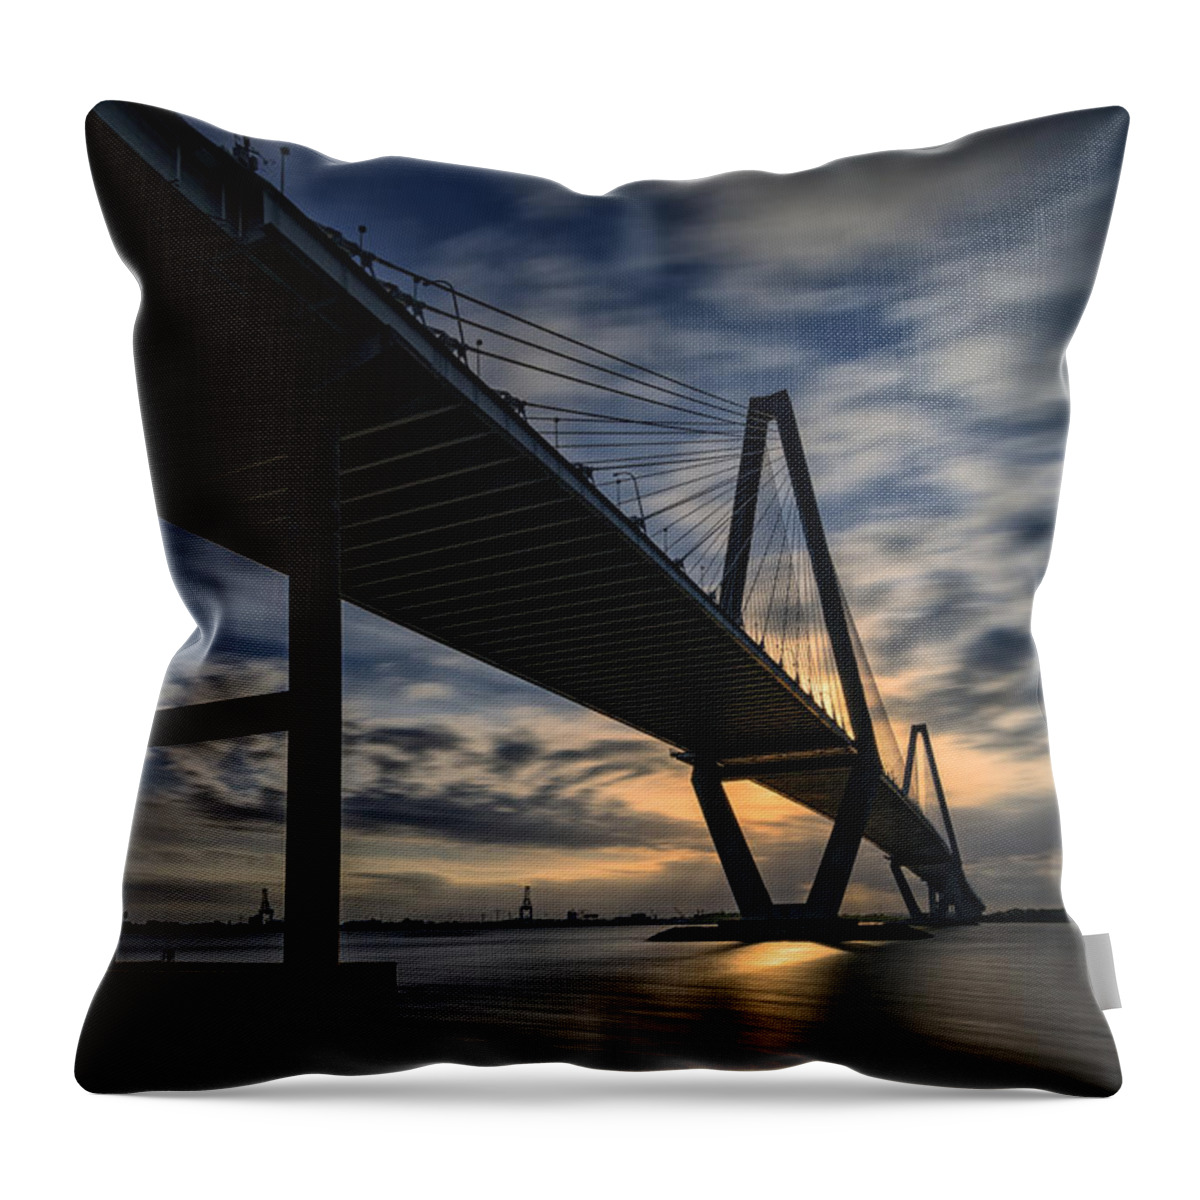 Ravenel Bridge Throw Pillow featuring the photograph New Cooper River Bridge by Rick Berk